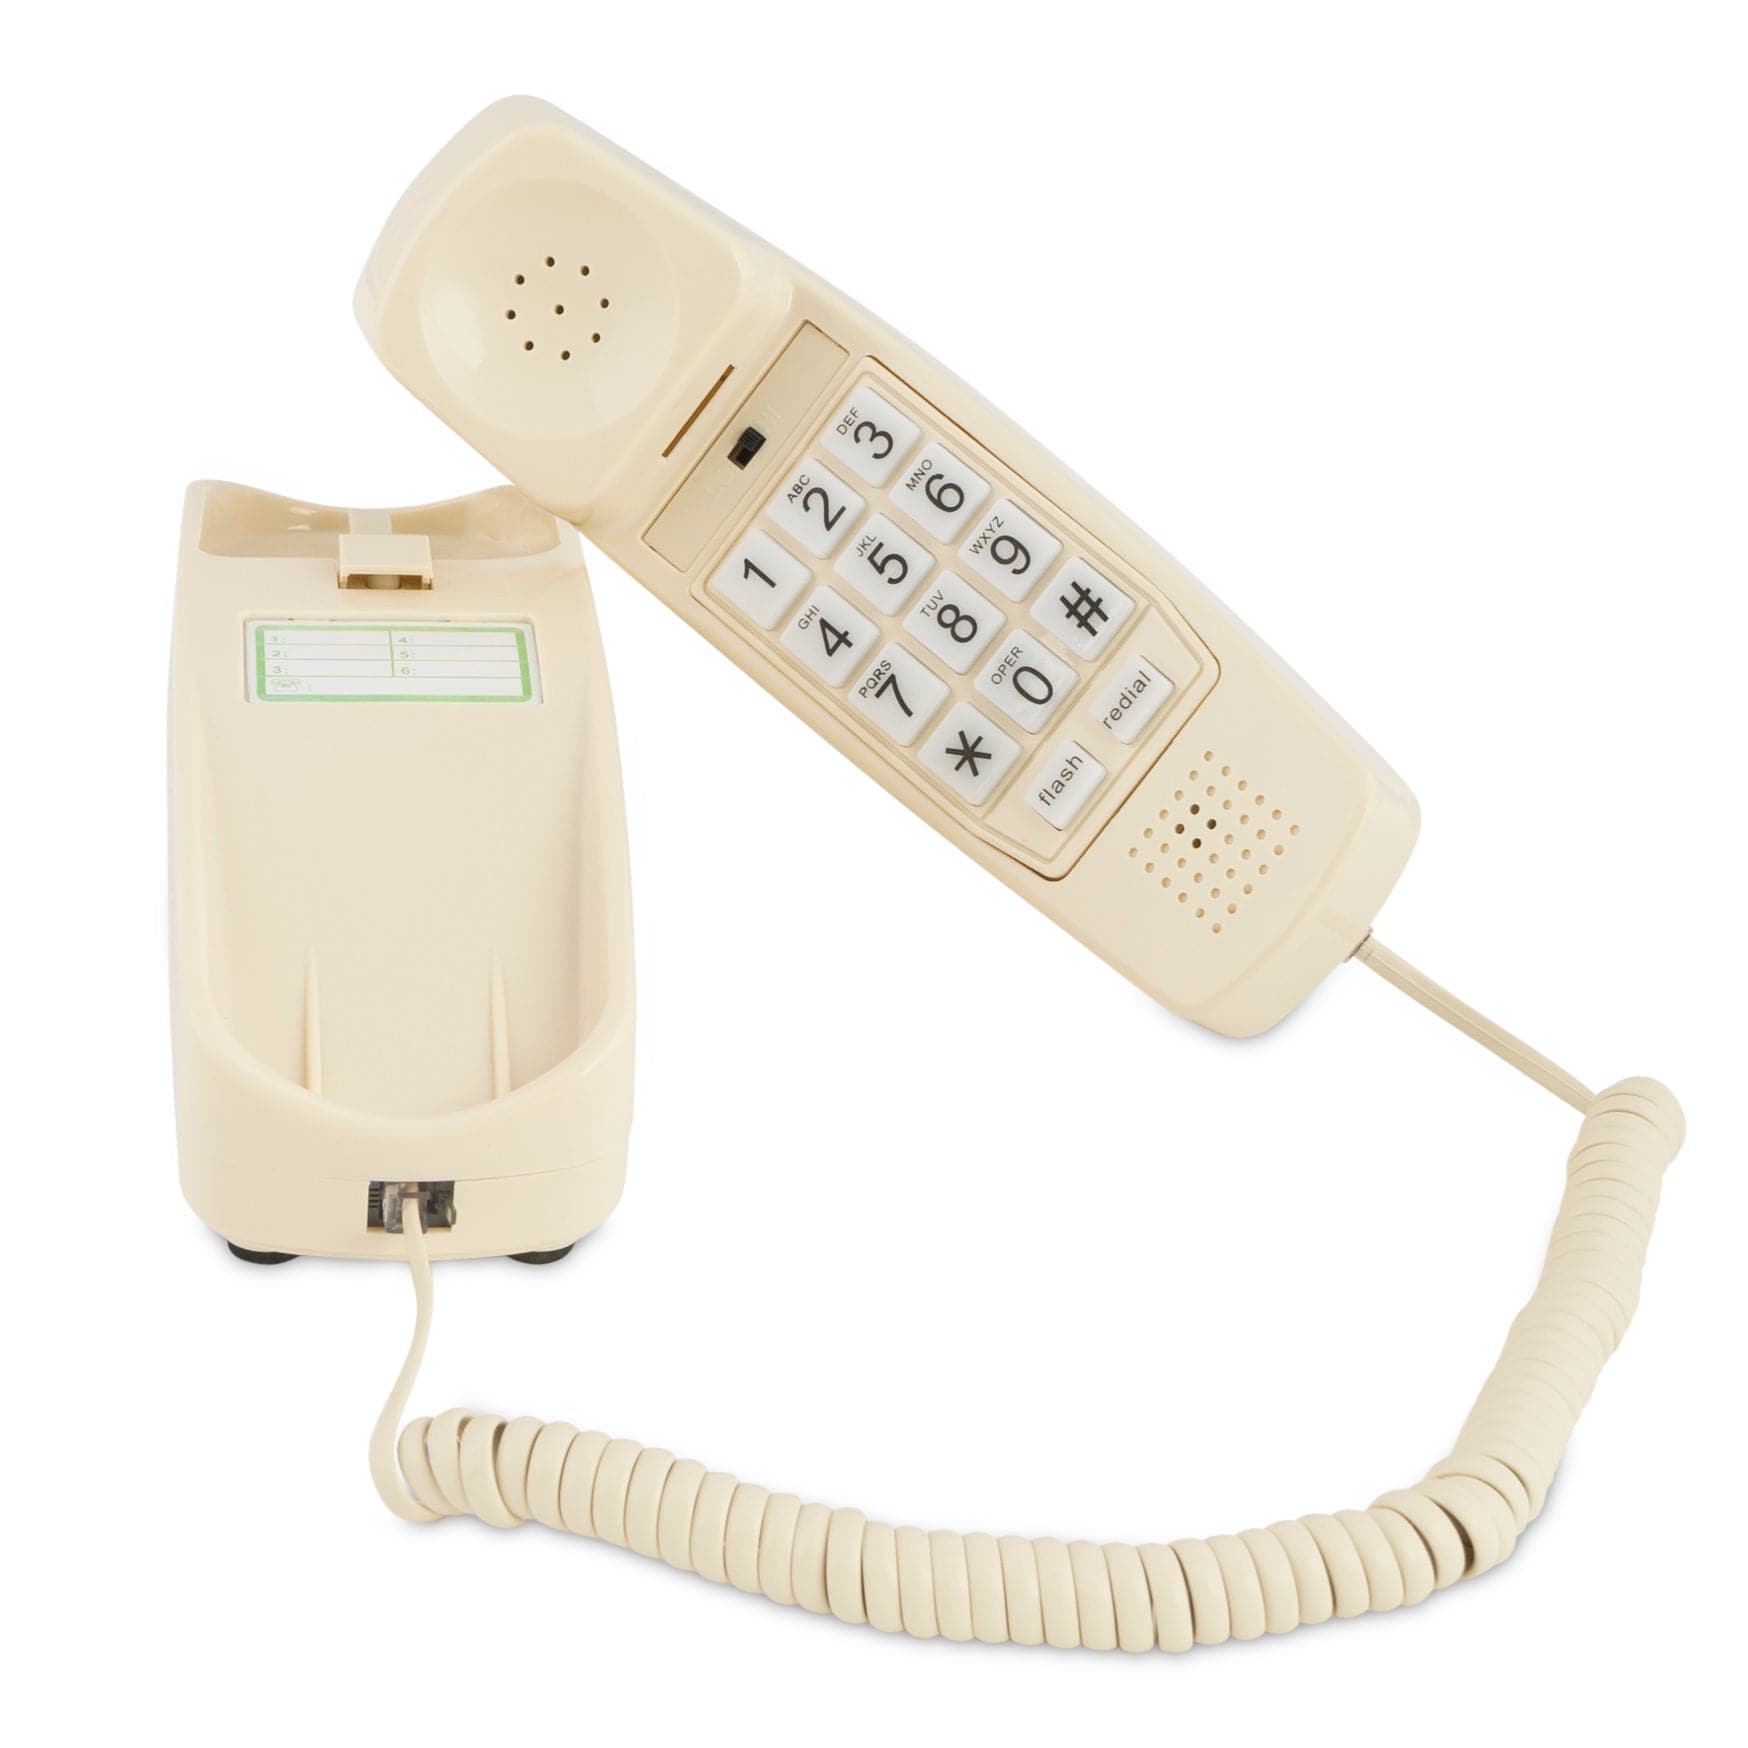 iSoHo Trimline Phone: Enhanced for Seniors, Visually Impaired. Large Buttons, Loud Ringer.Perfect for Hearing and Visually Impaired. Retro Style, Reliable Performance - Bone Ivory - USA Trading Depot, LLC